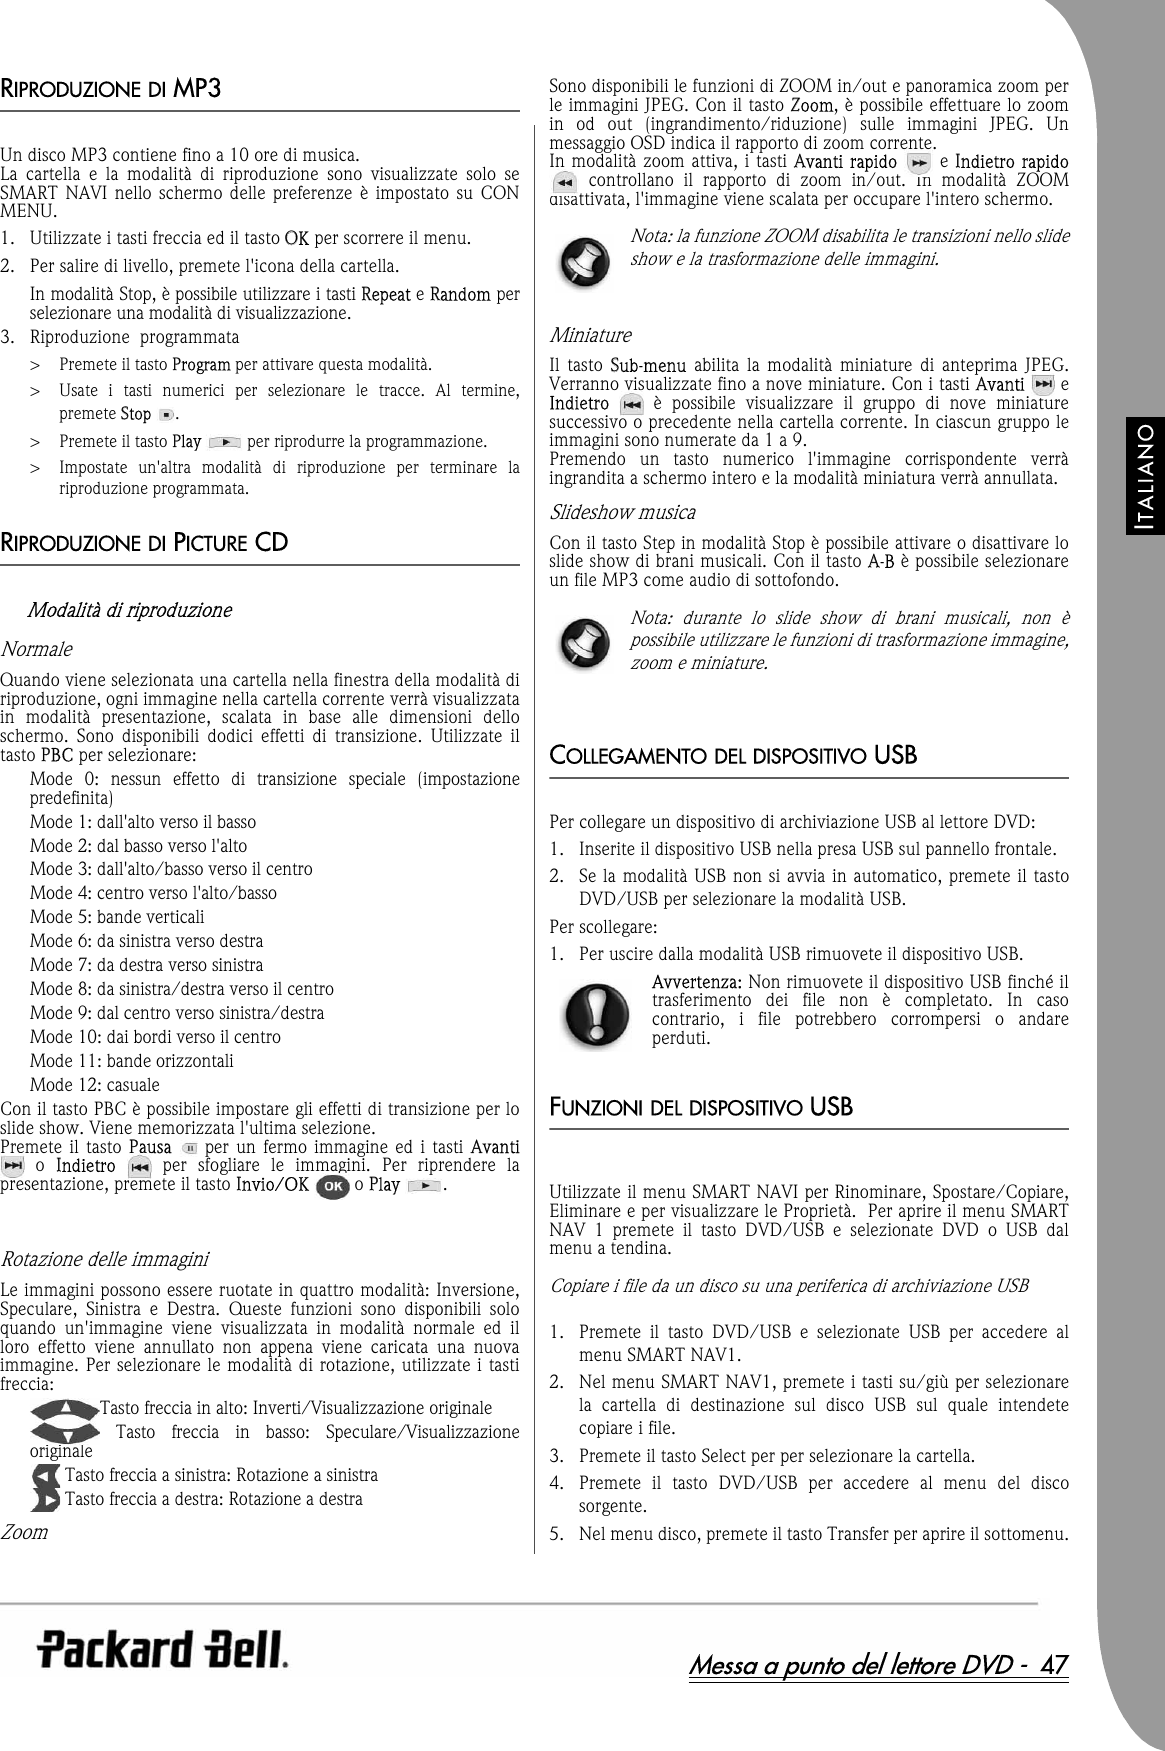 Packard Bell Dvx 460 Users Manual Dvd Usb